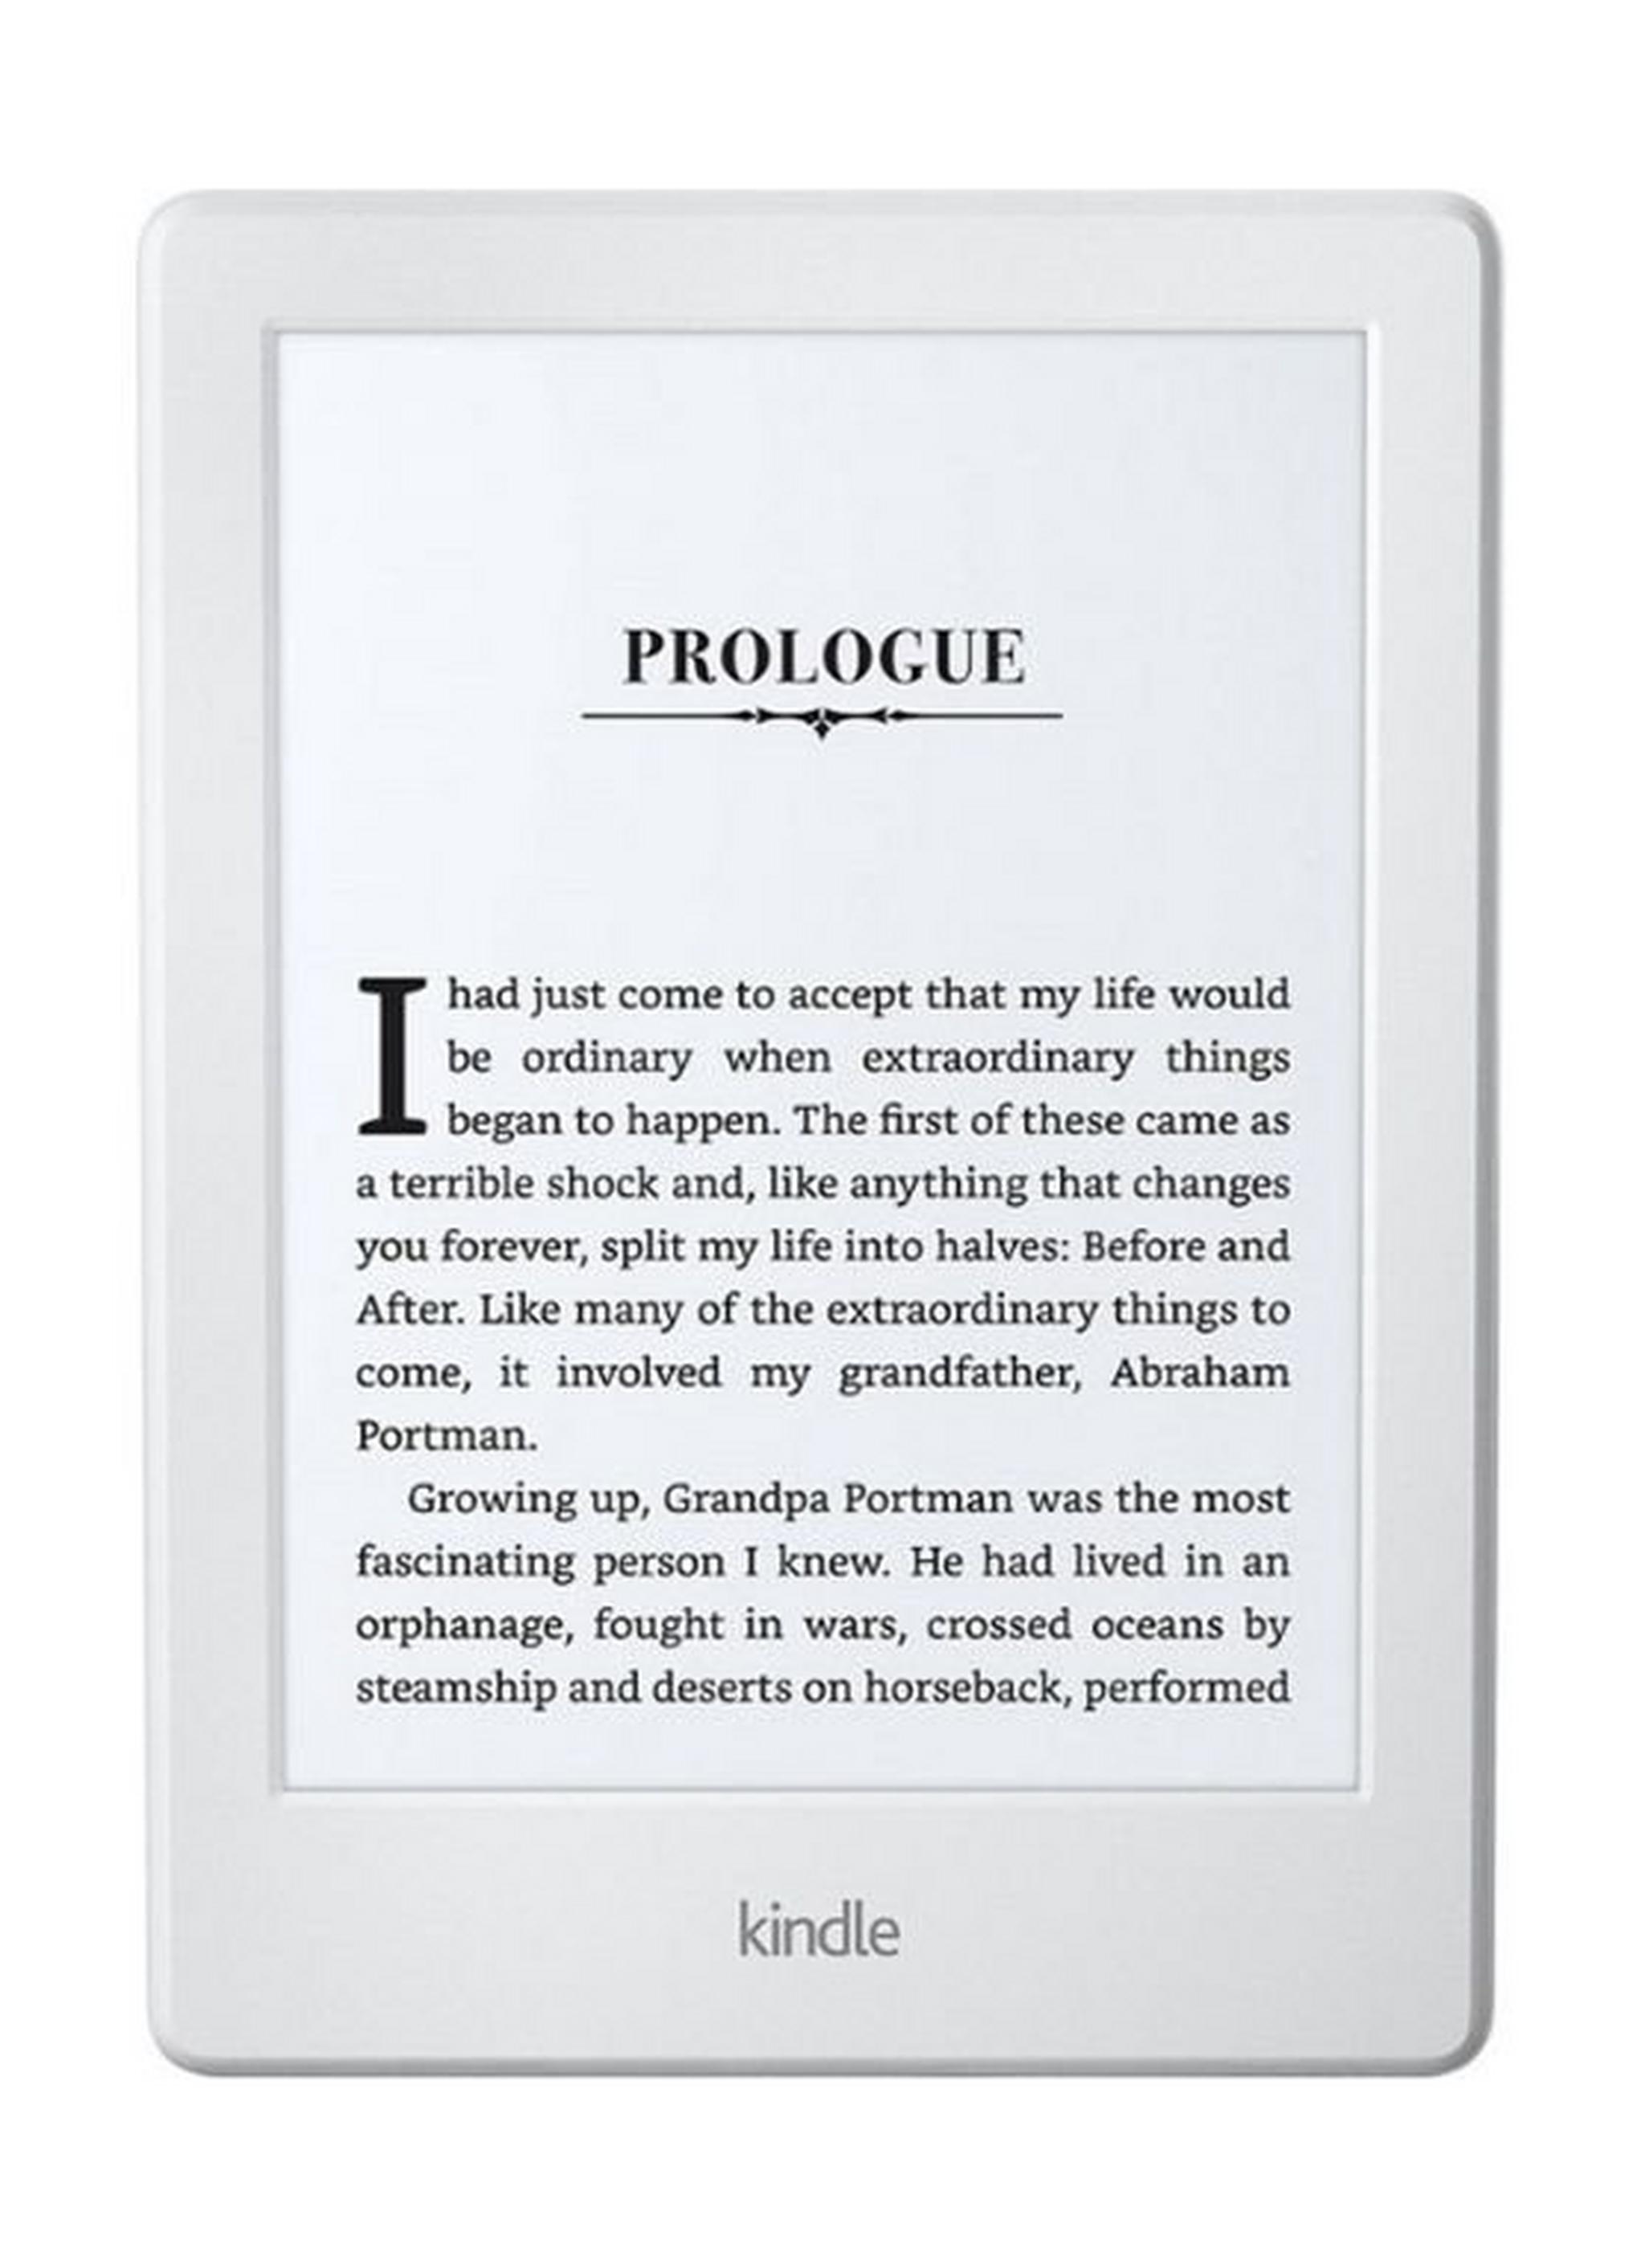 Amazon Kindle Paperwhite 6-inch E-Reader Tablet - White